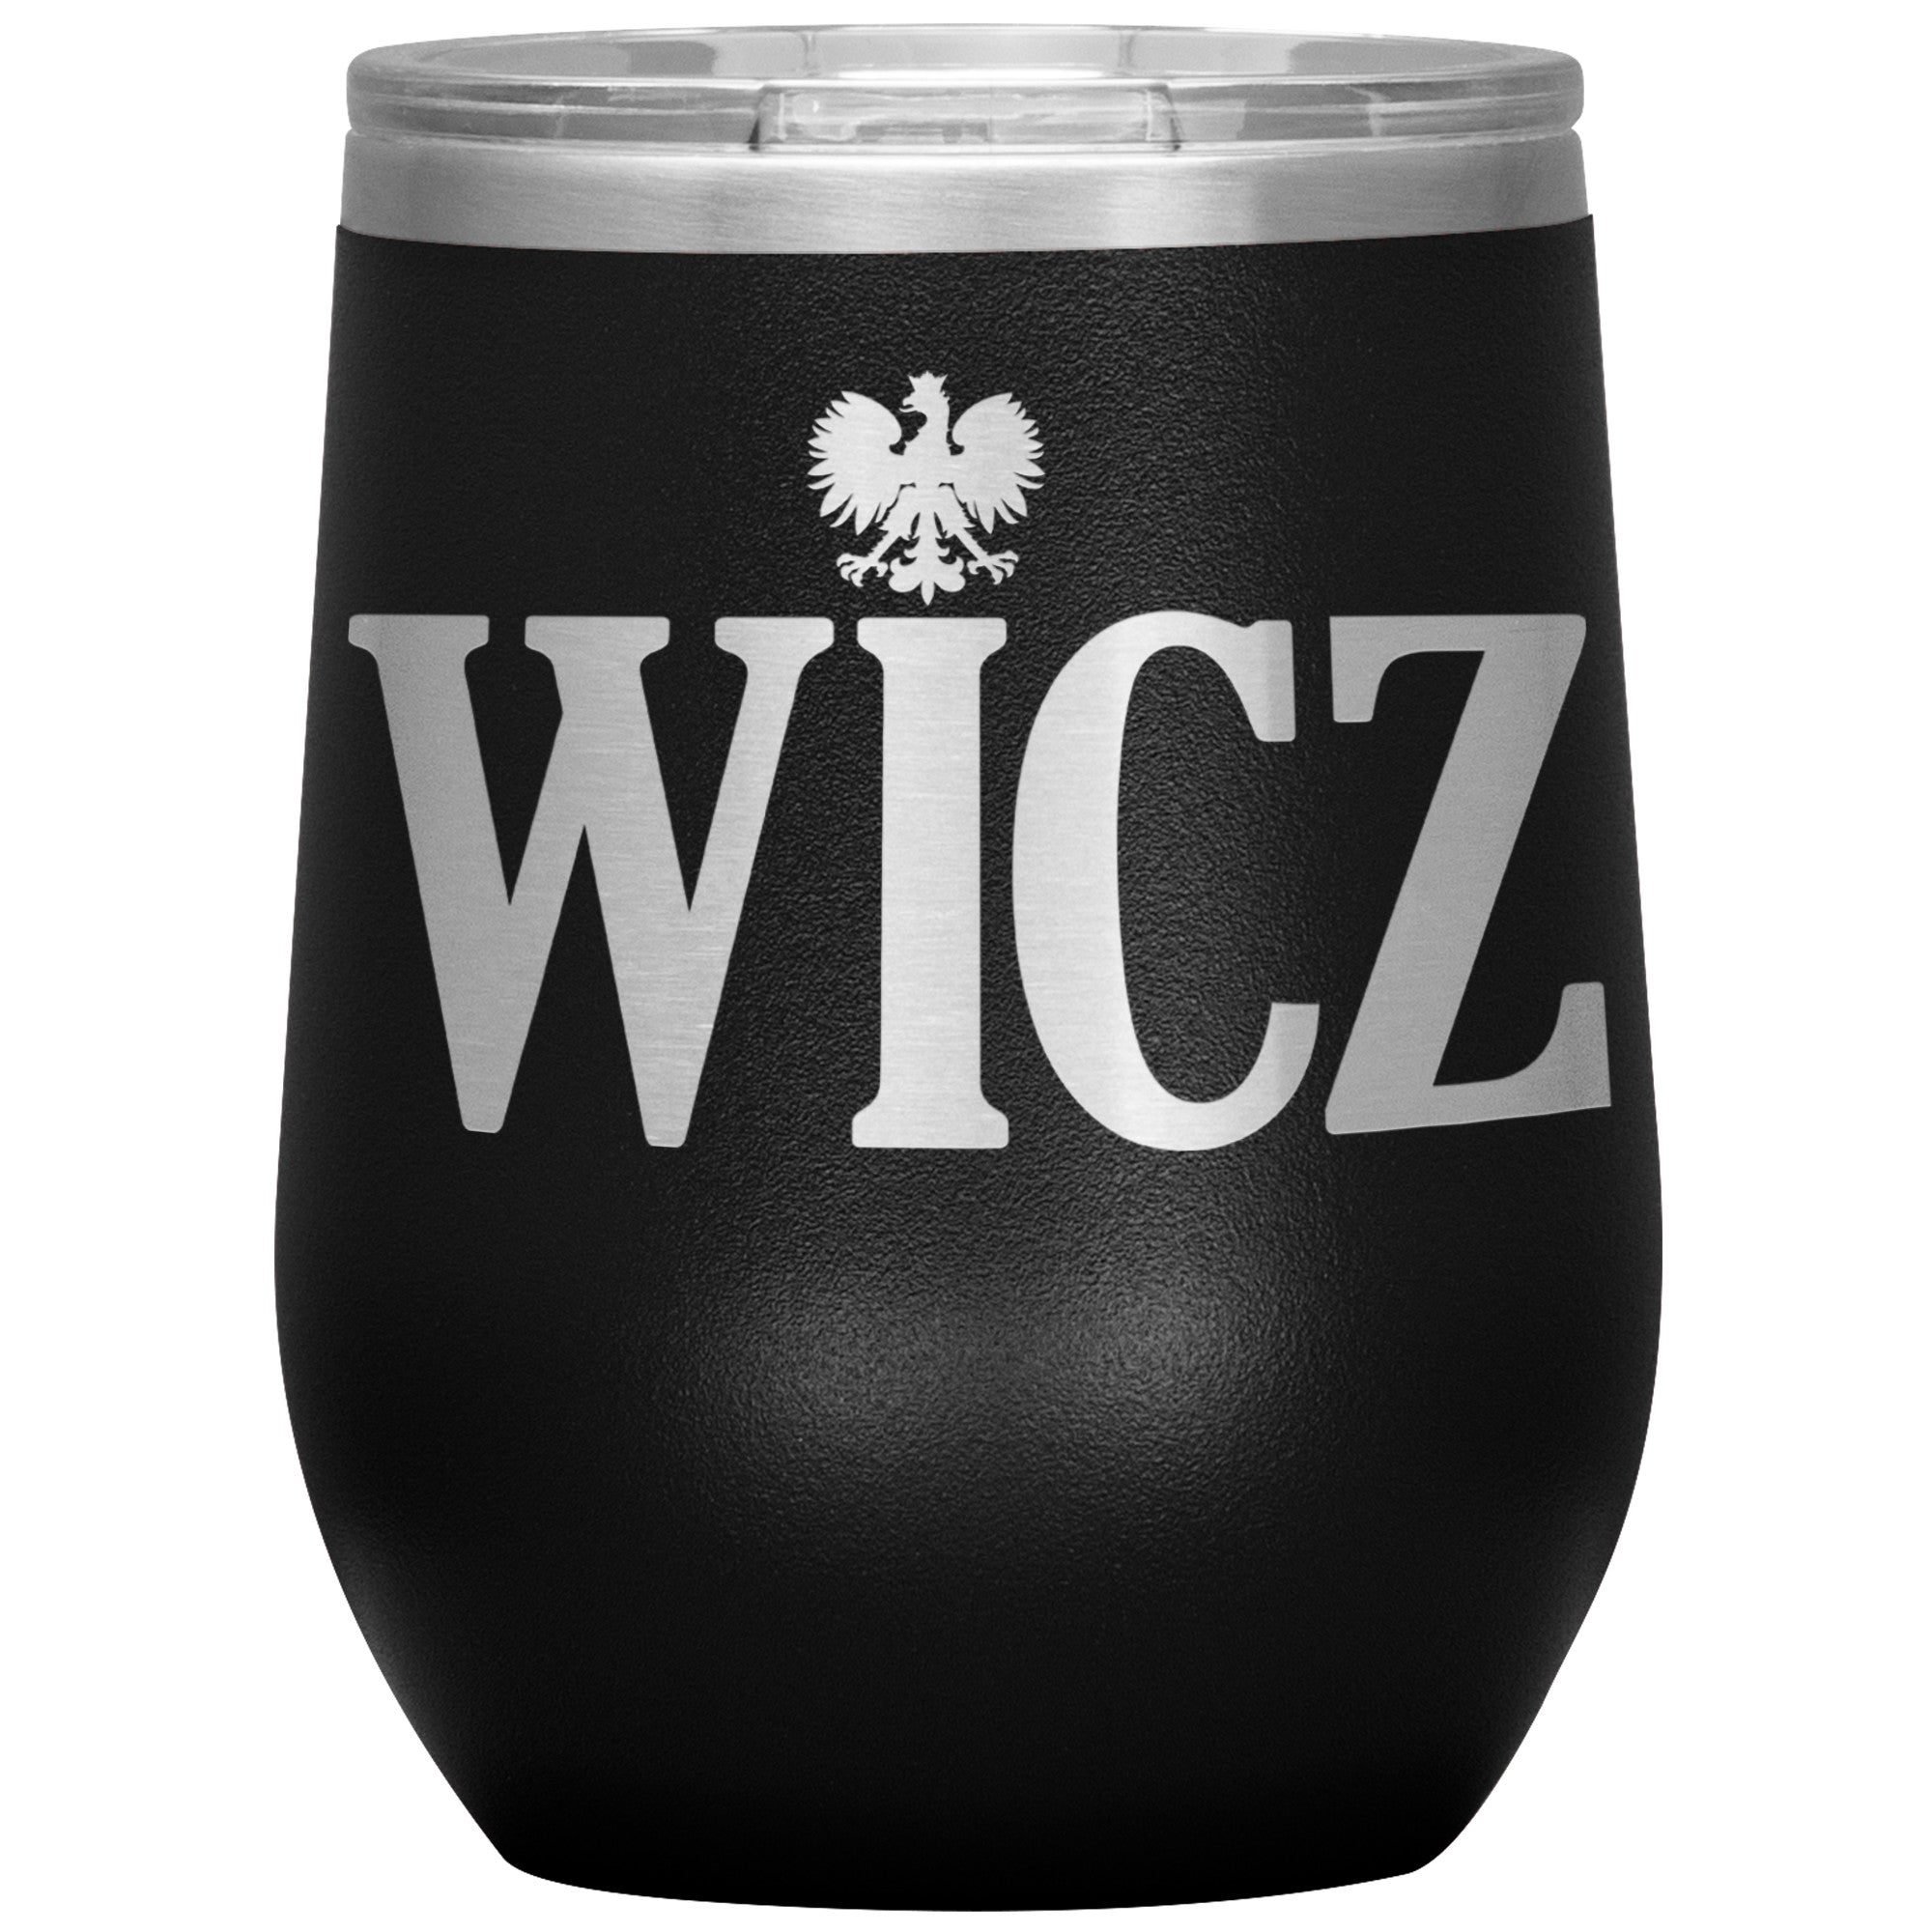 Polish Surname Ending in WICZ Insulated Wine Tumbler Tumblers teelaunch Black  